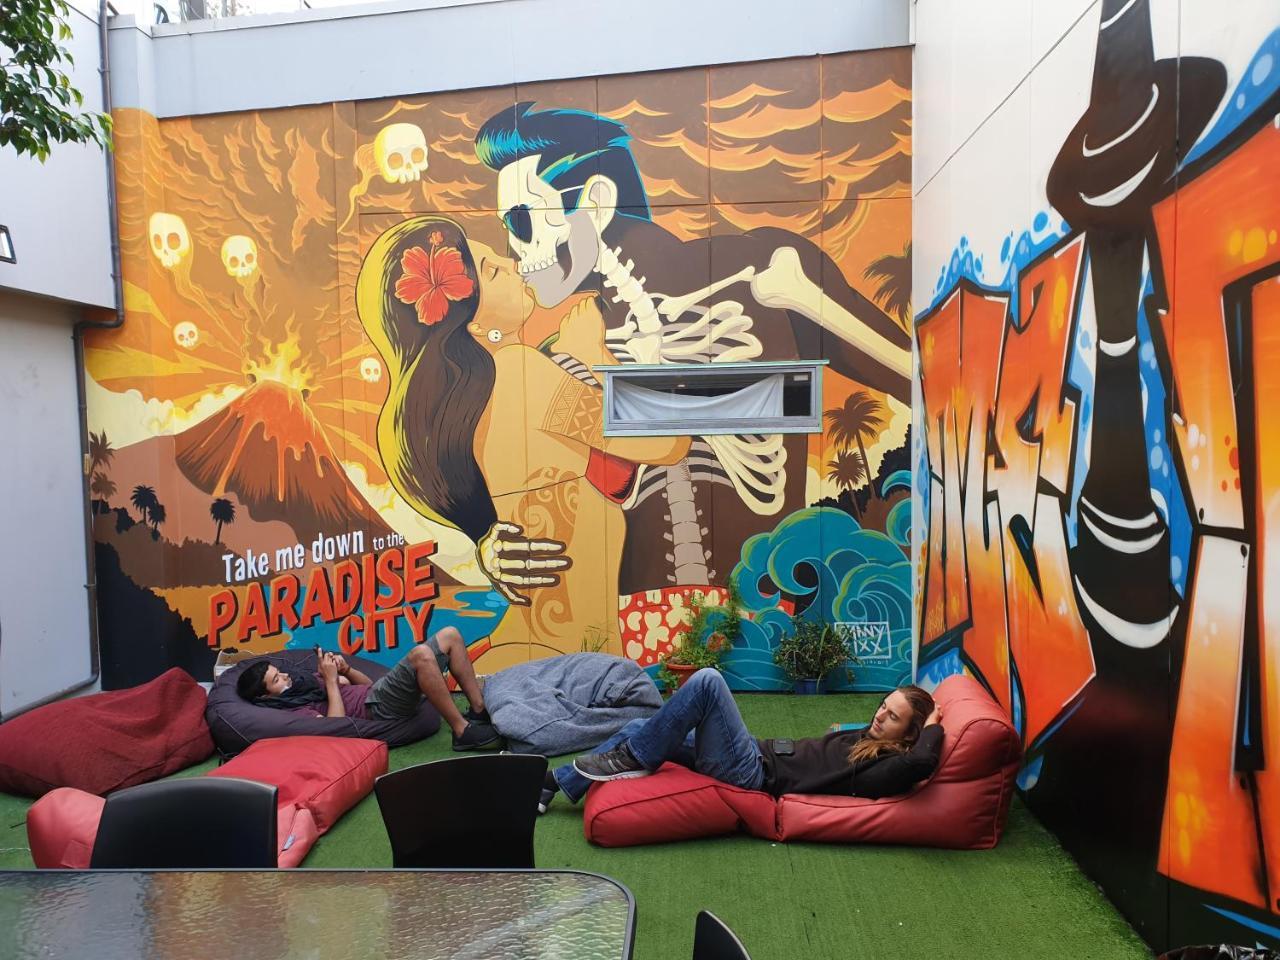 Metro Adventurer Backpackers Hostel Auckland Luaran gambar